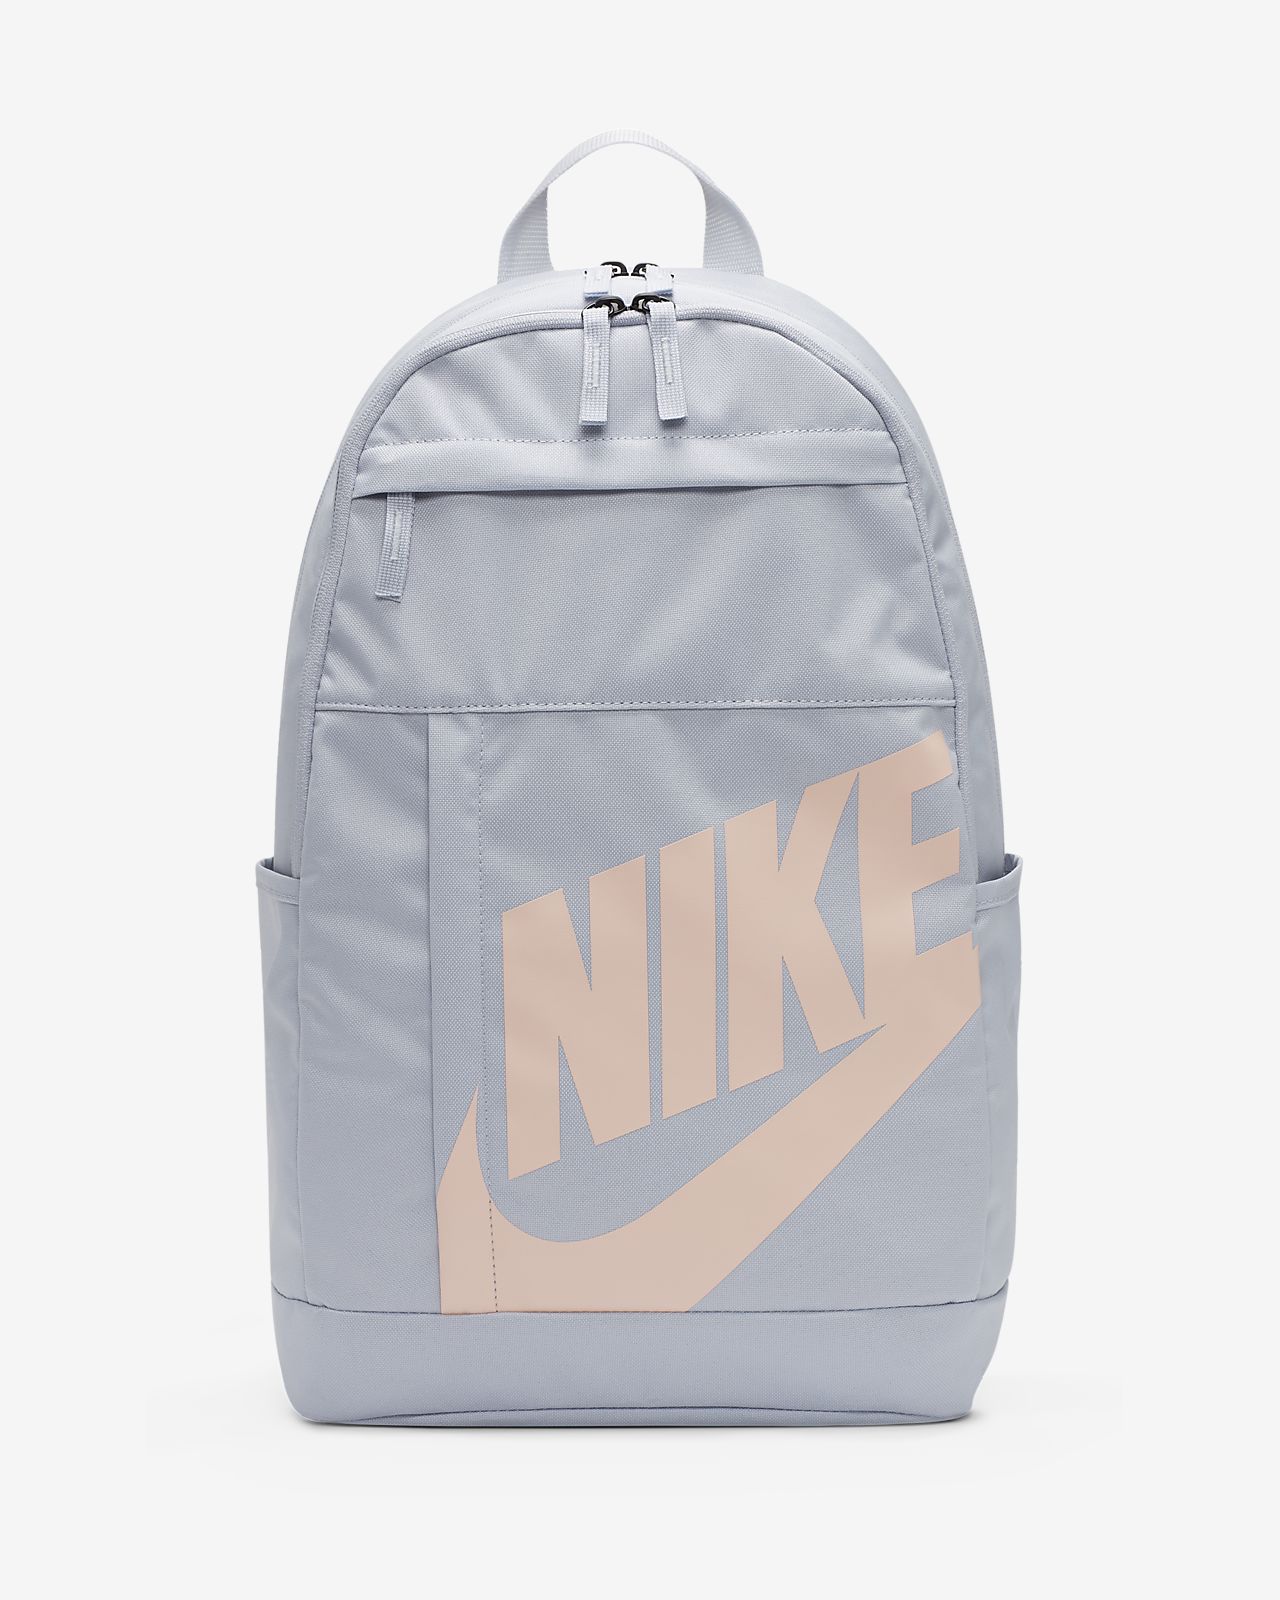 nike backpack deals